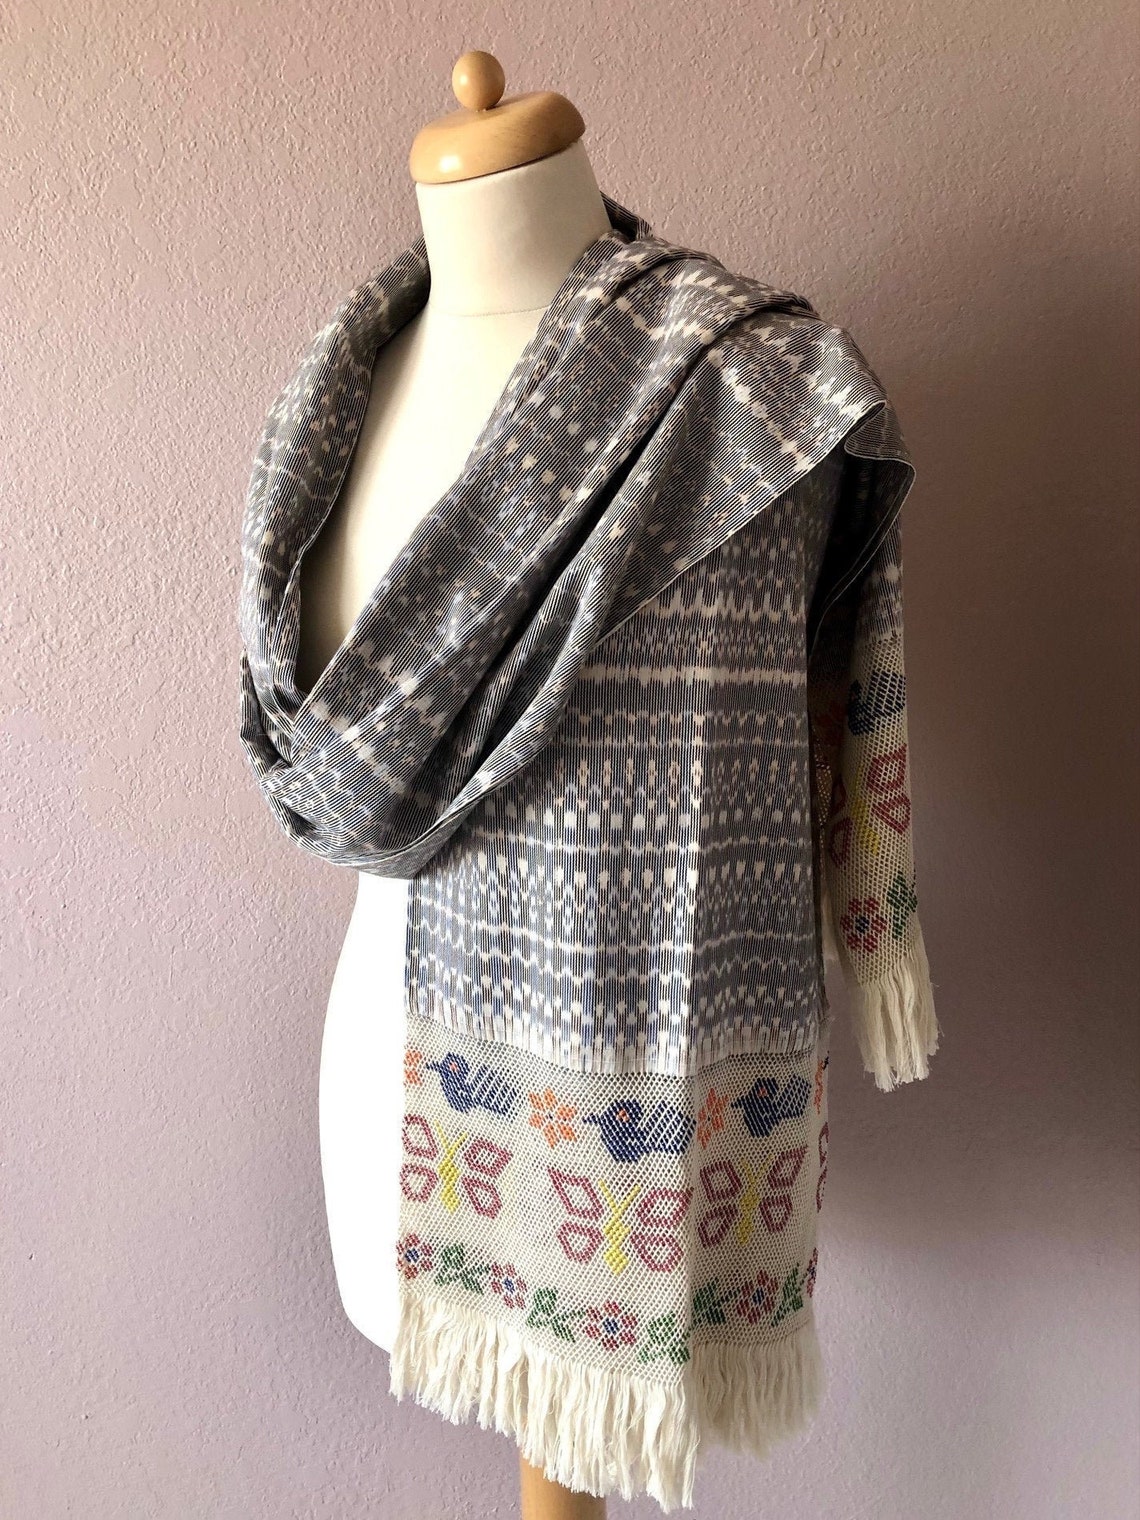 Collectors Classic Mexican Rebozo shawl handwoven ikat | Etsy